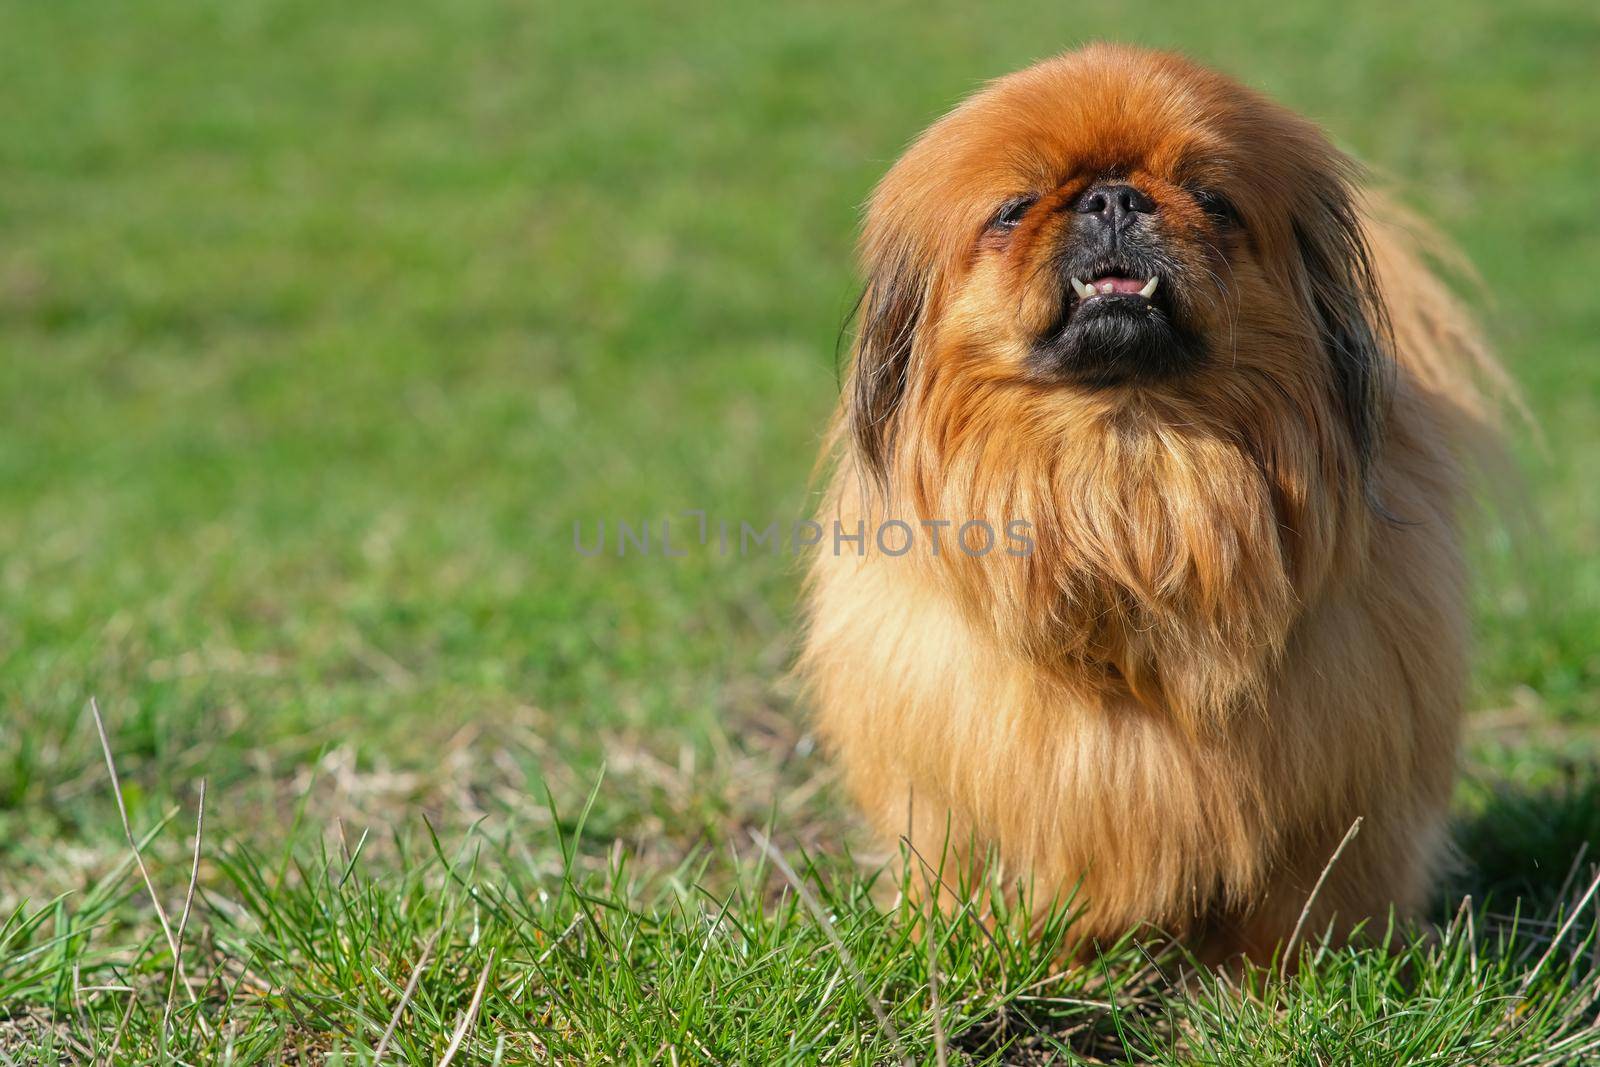 Dog breed Pekingese on a green grass. Shaggy elderly Pekingese red color. Cute fluffy dog.